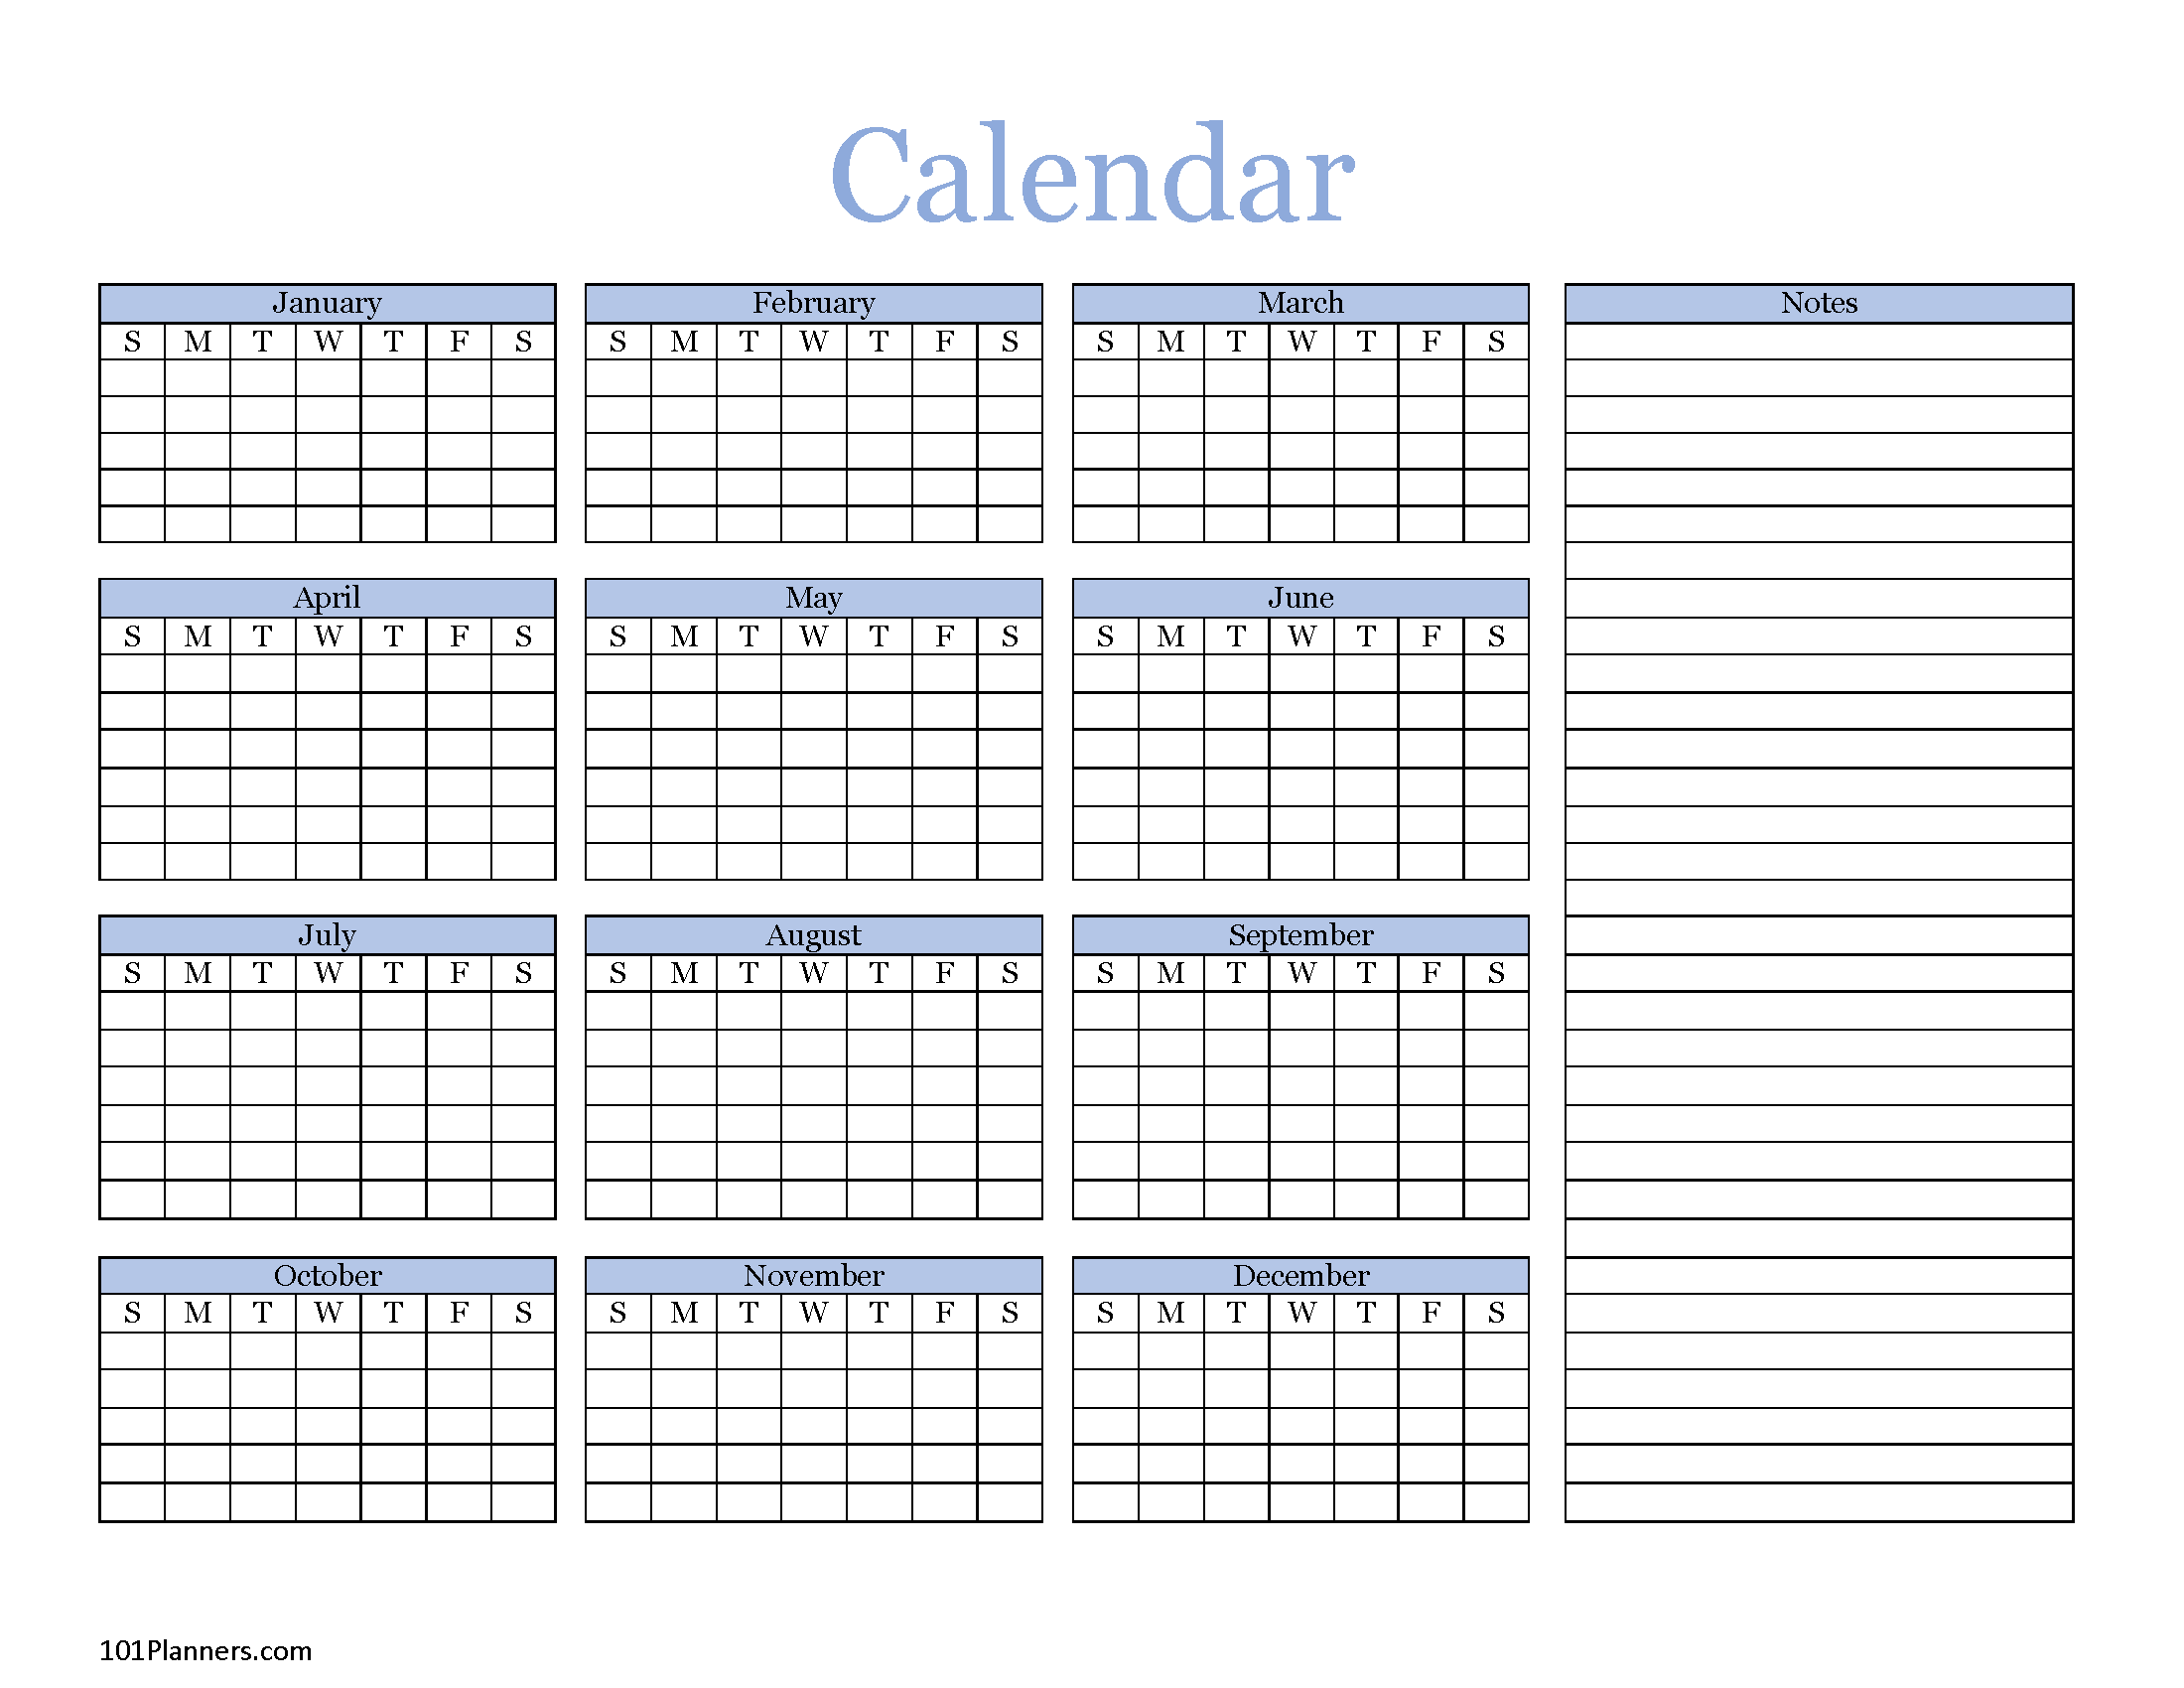 yearly-blank-calendar-microsoft-word-editable-pdf-and-image-files